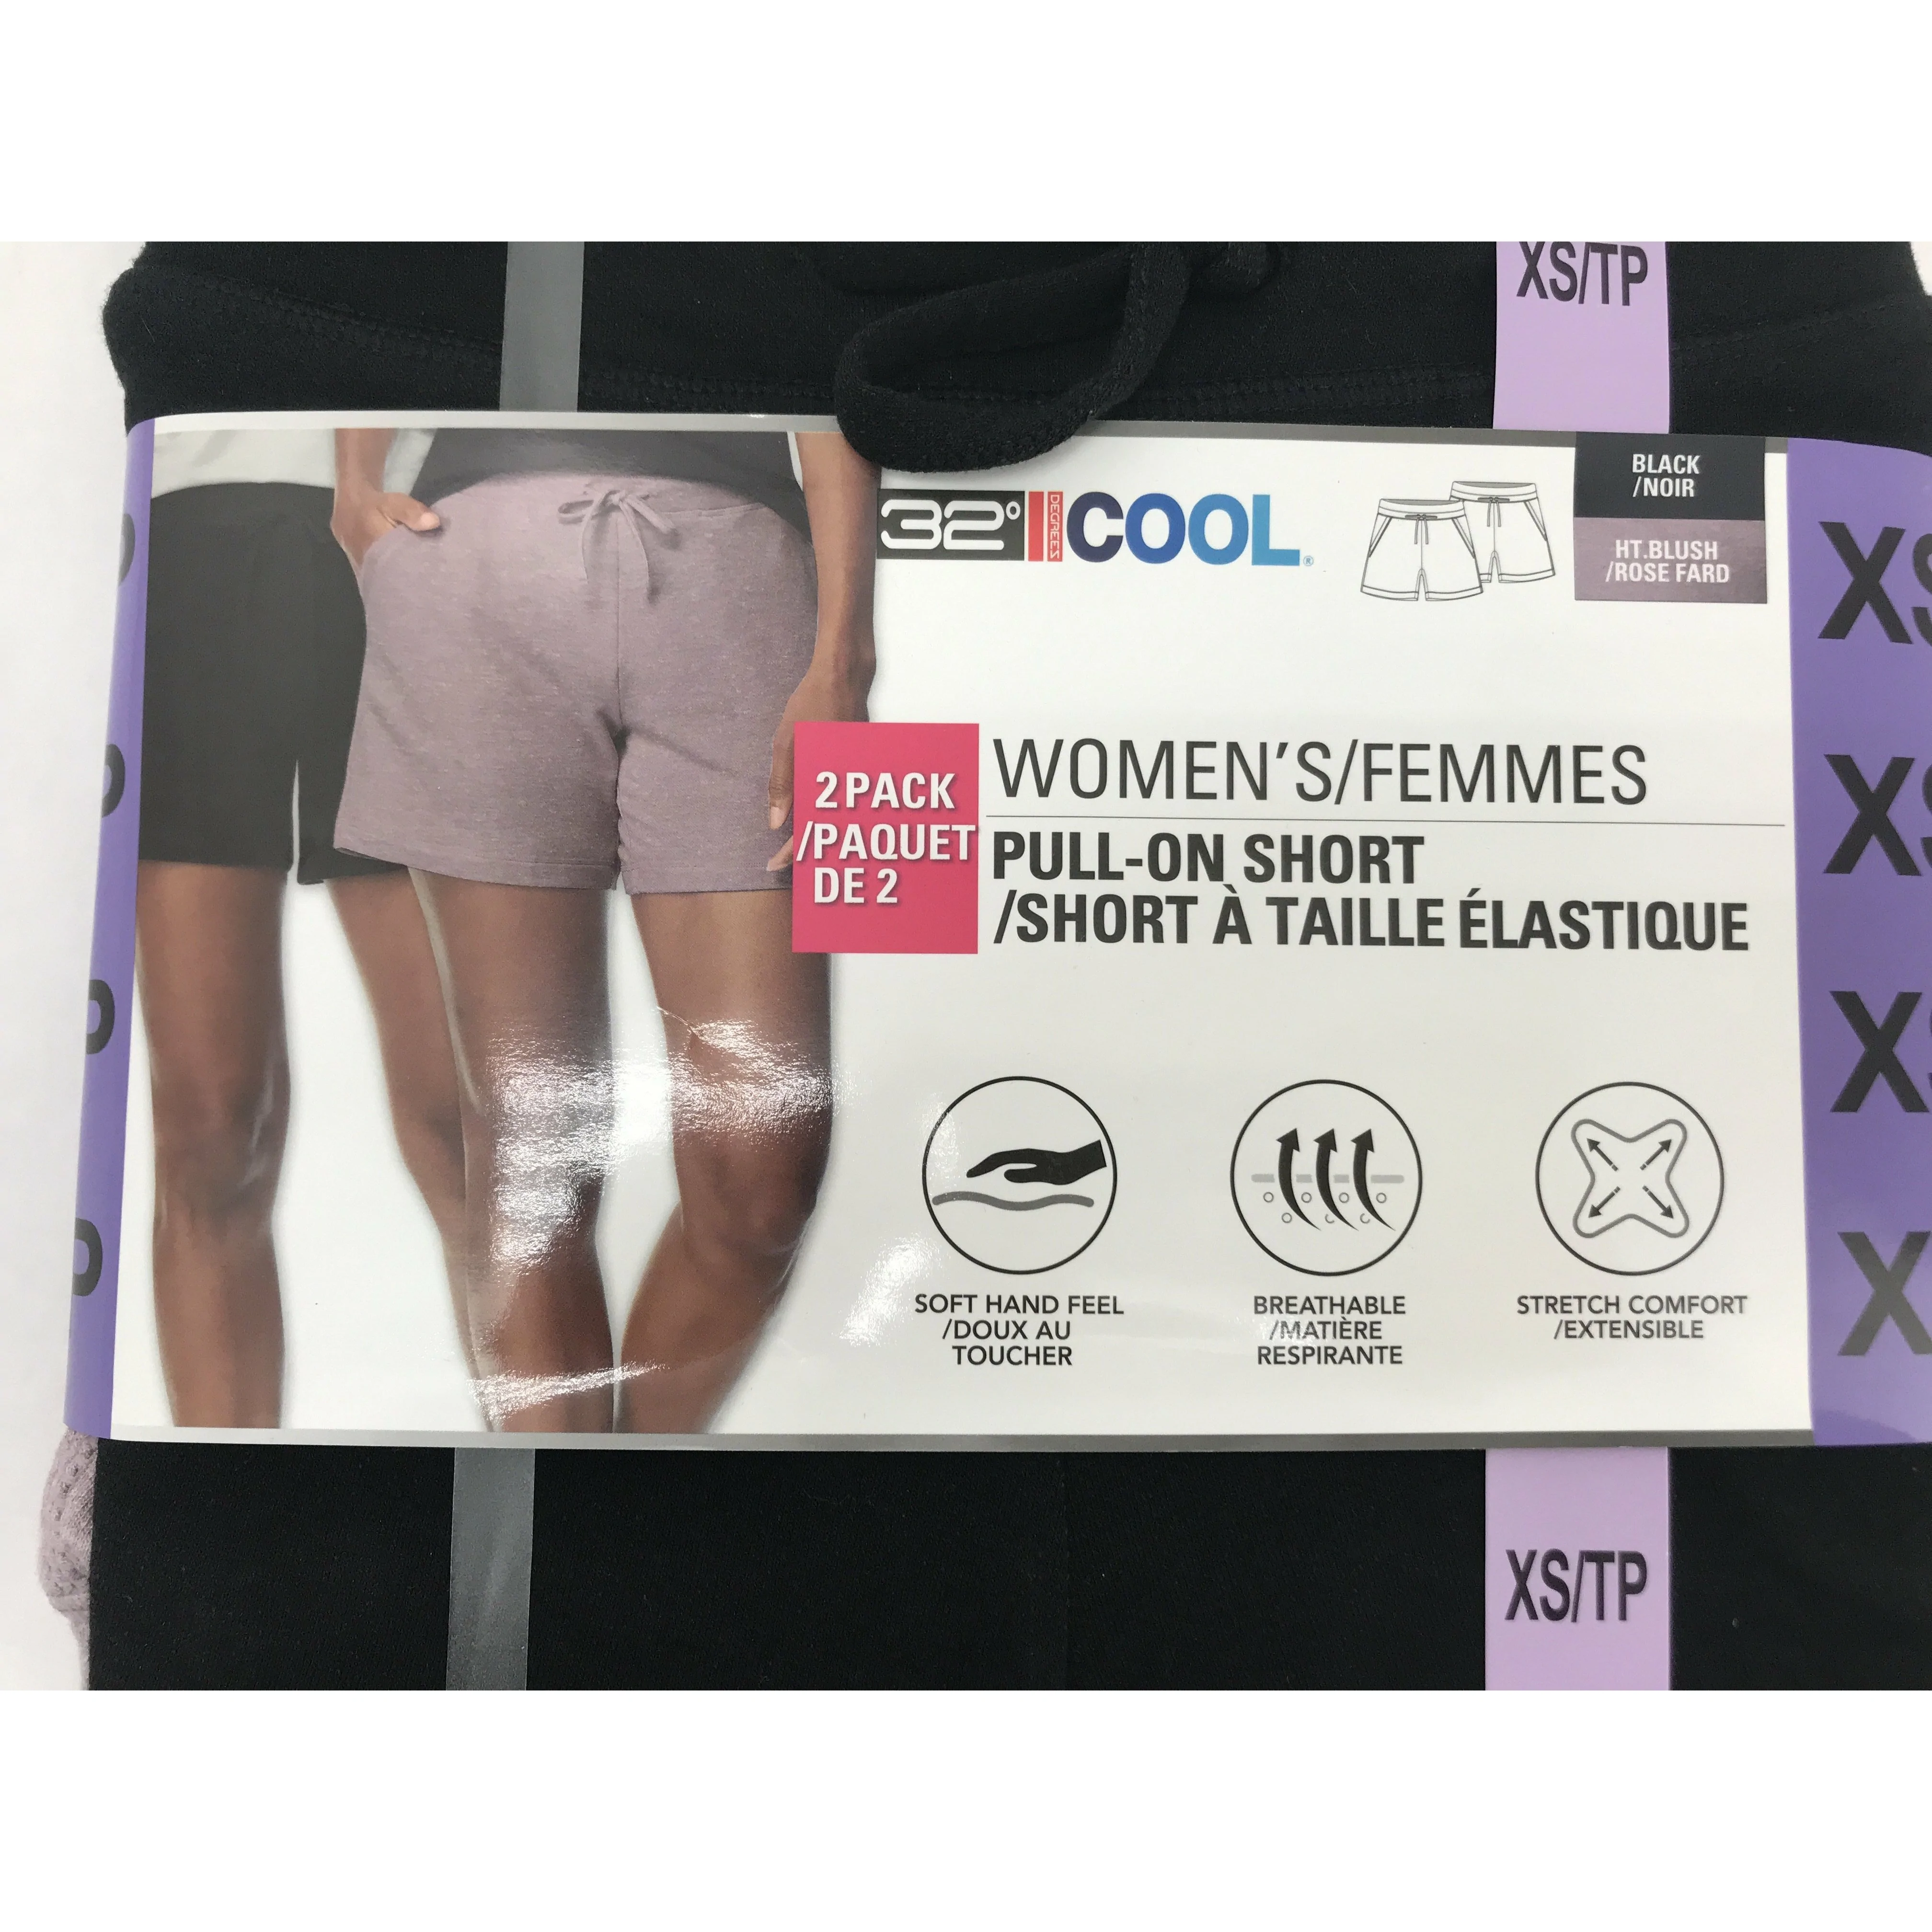 32 Degree Cool Women's Short's / Pull On Shorts / Lounge Shorts / 2 Pack / Black & Blush / Various Sizes